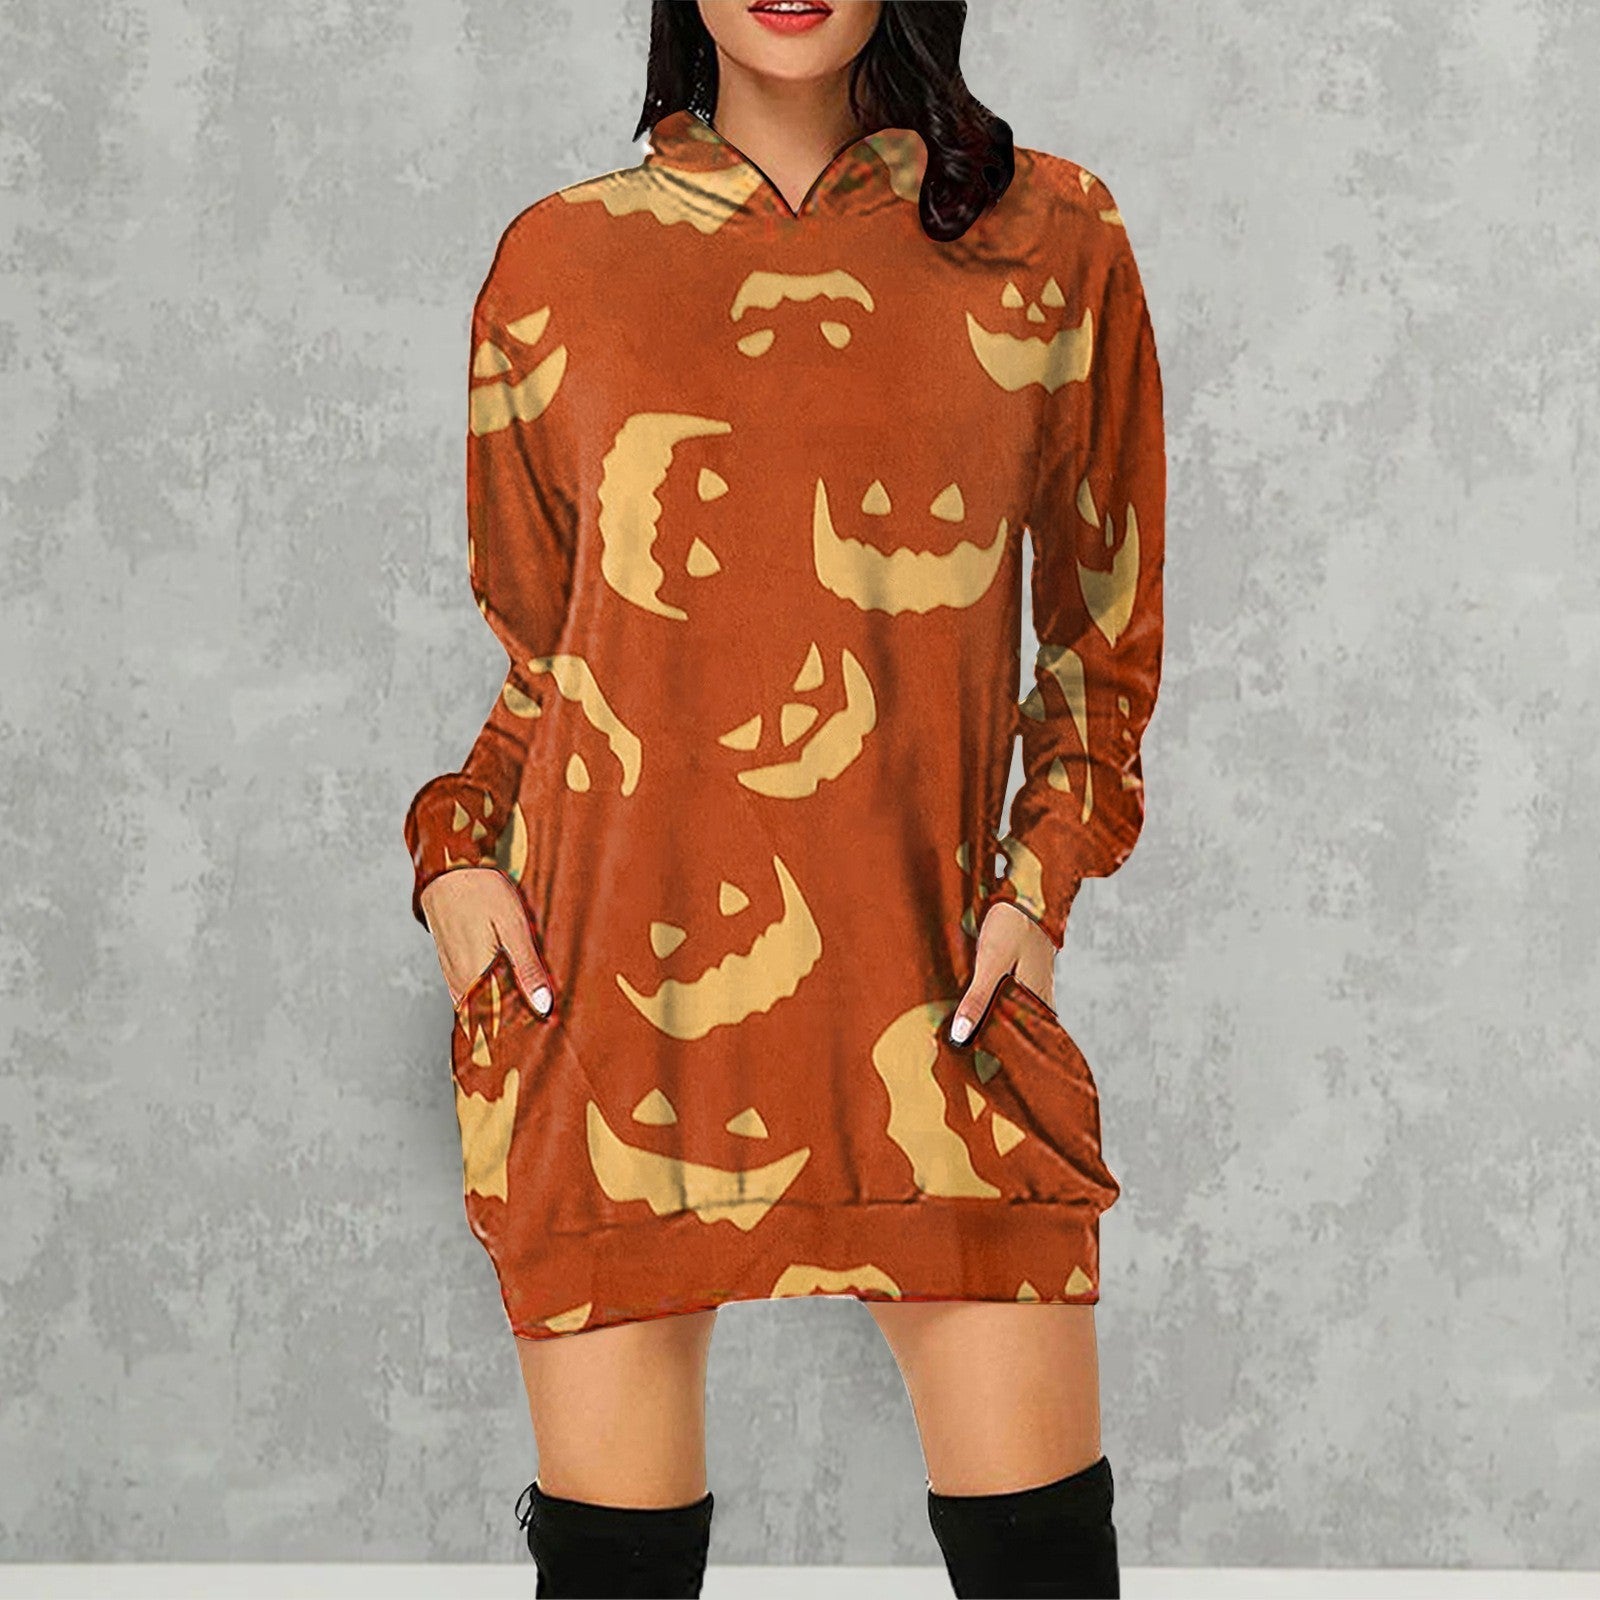 Halloween Pumpkin Design Long Sleeves Hoodies for Women-Orange Grimace-S-Free Shipping at meselling99